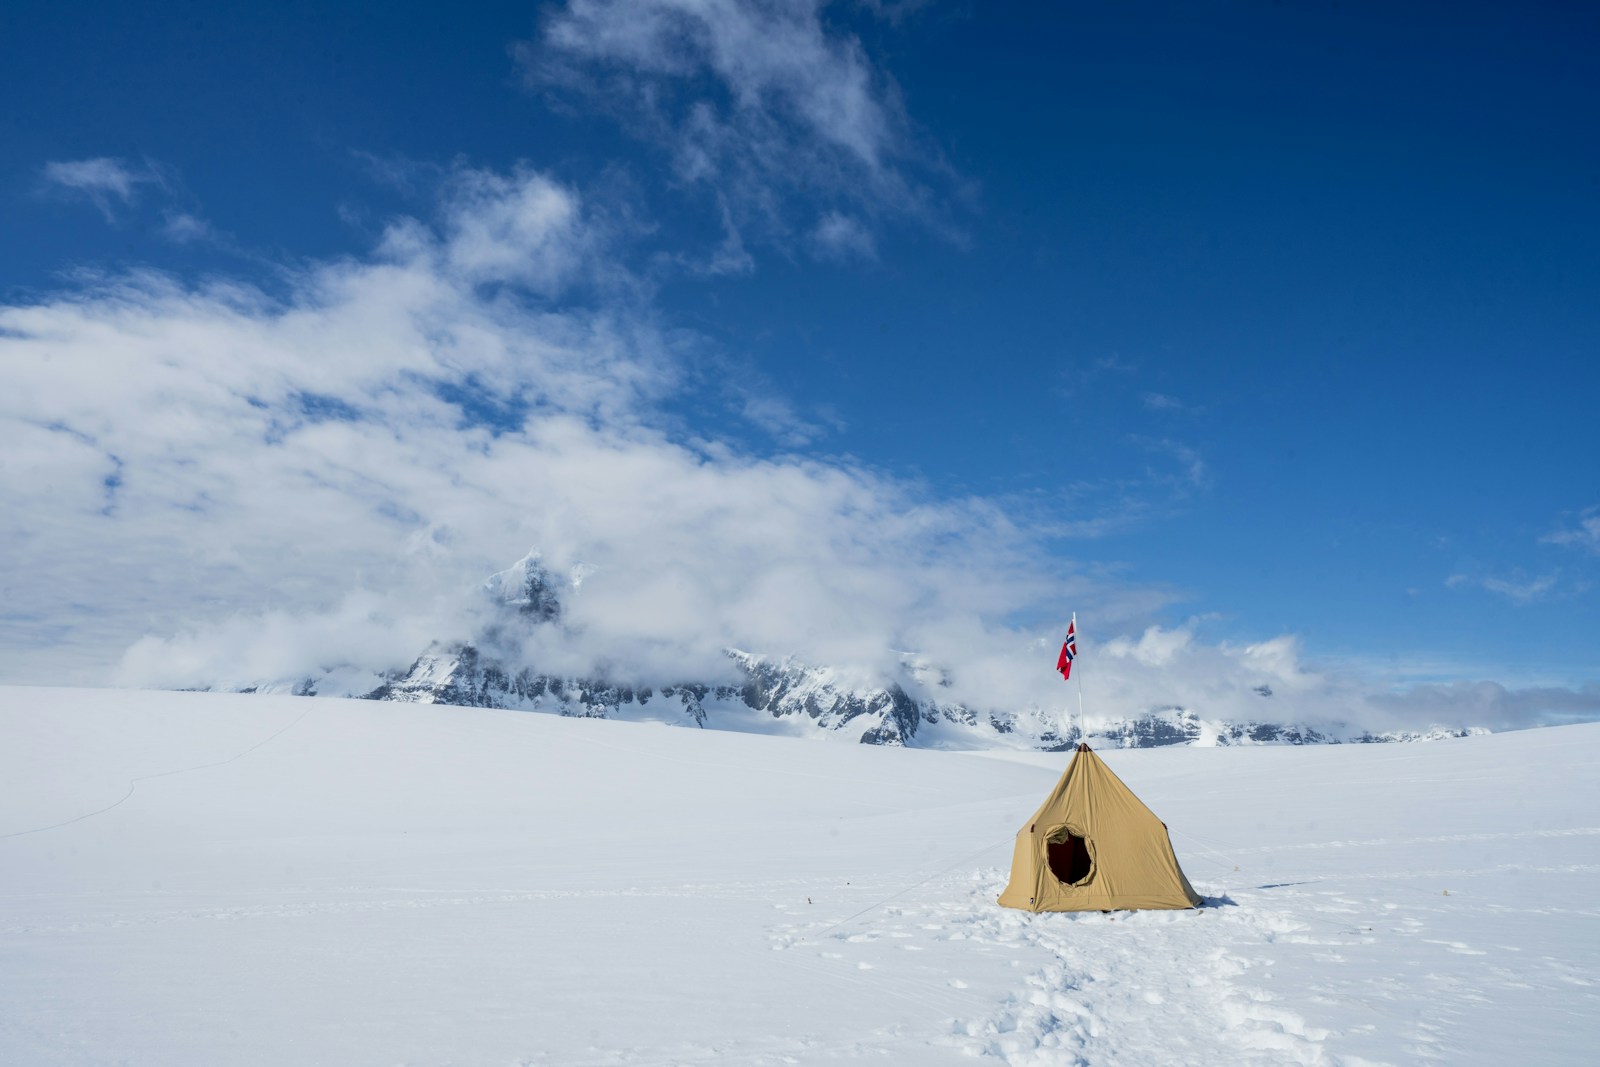 Roald Amundsen’s Race to the South Pole: A Triumph of Polar Exploration